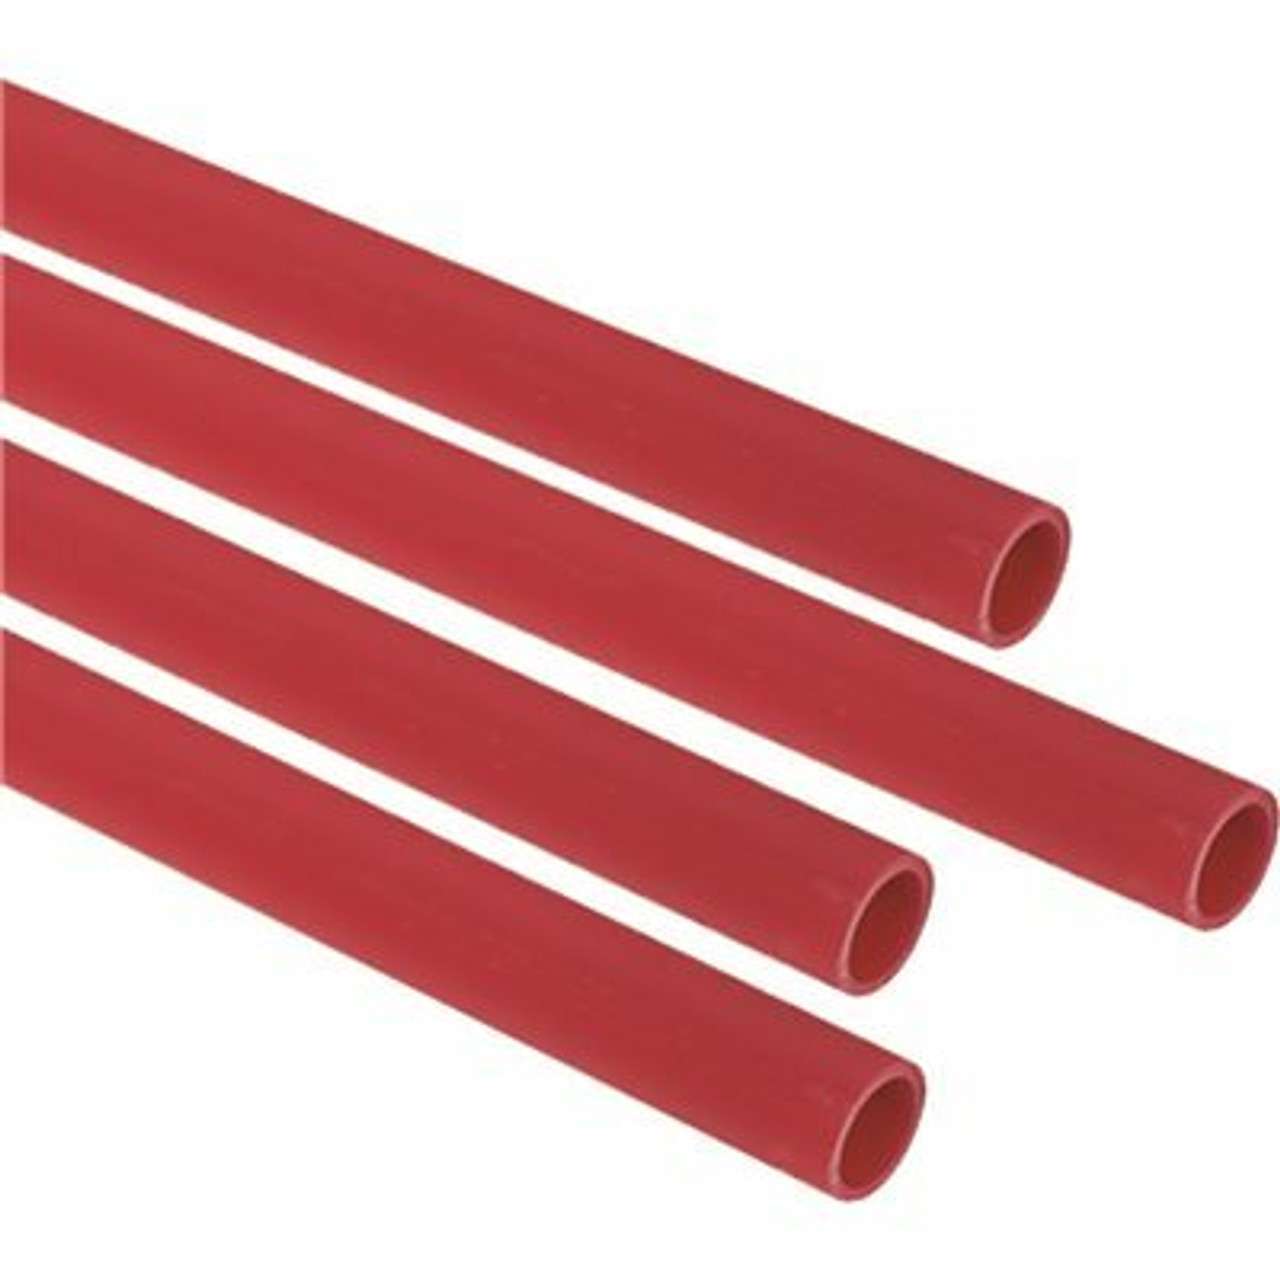 Viega Pureflow 1/2 In. X 20 Ft. Red Pex Tubing